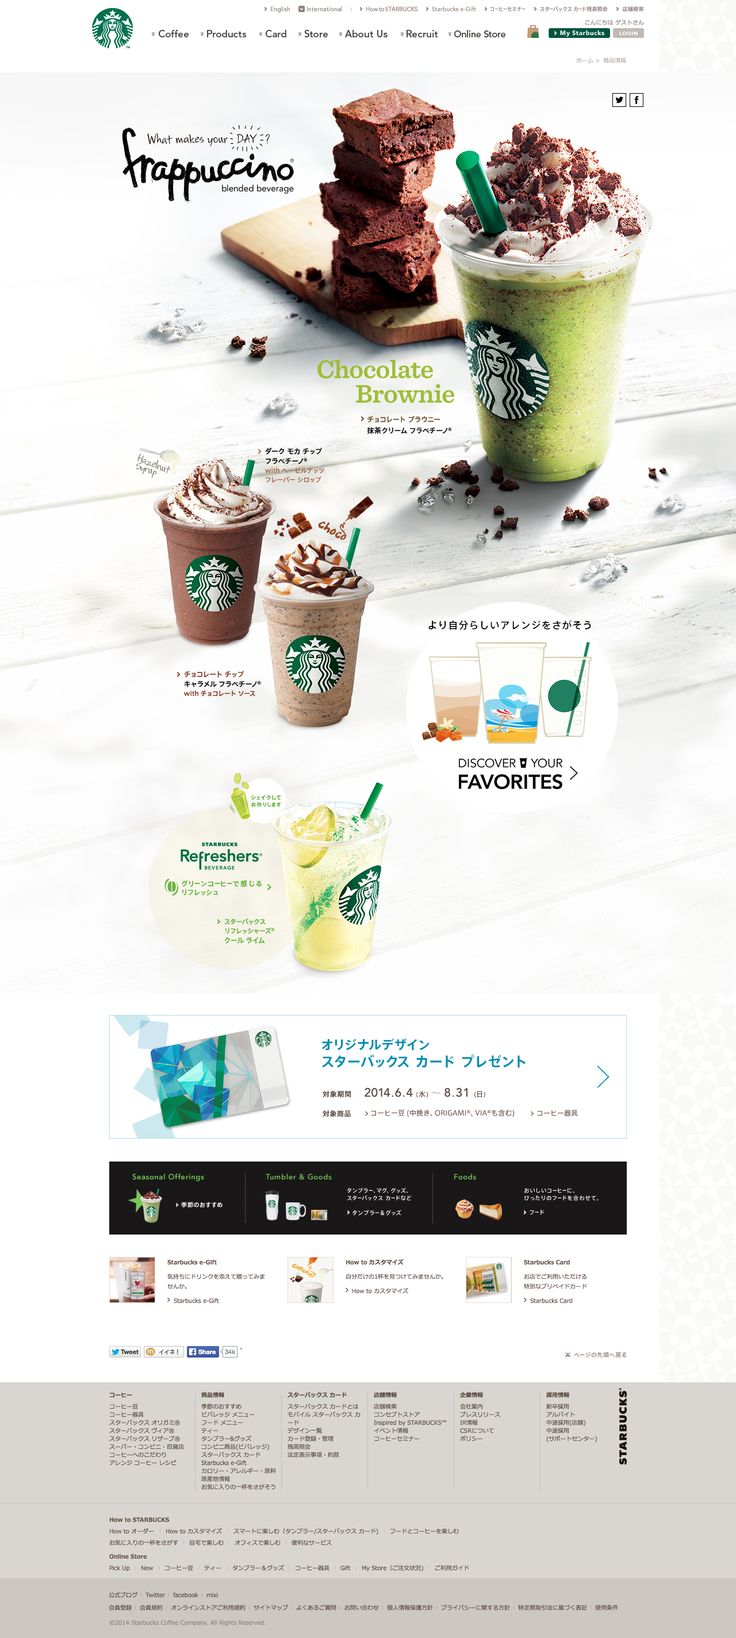 Starbucks Japan